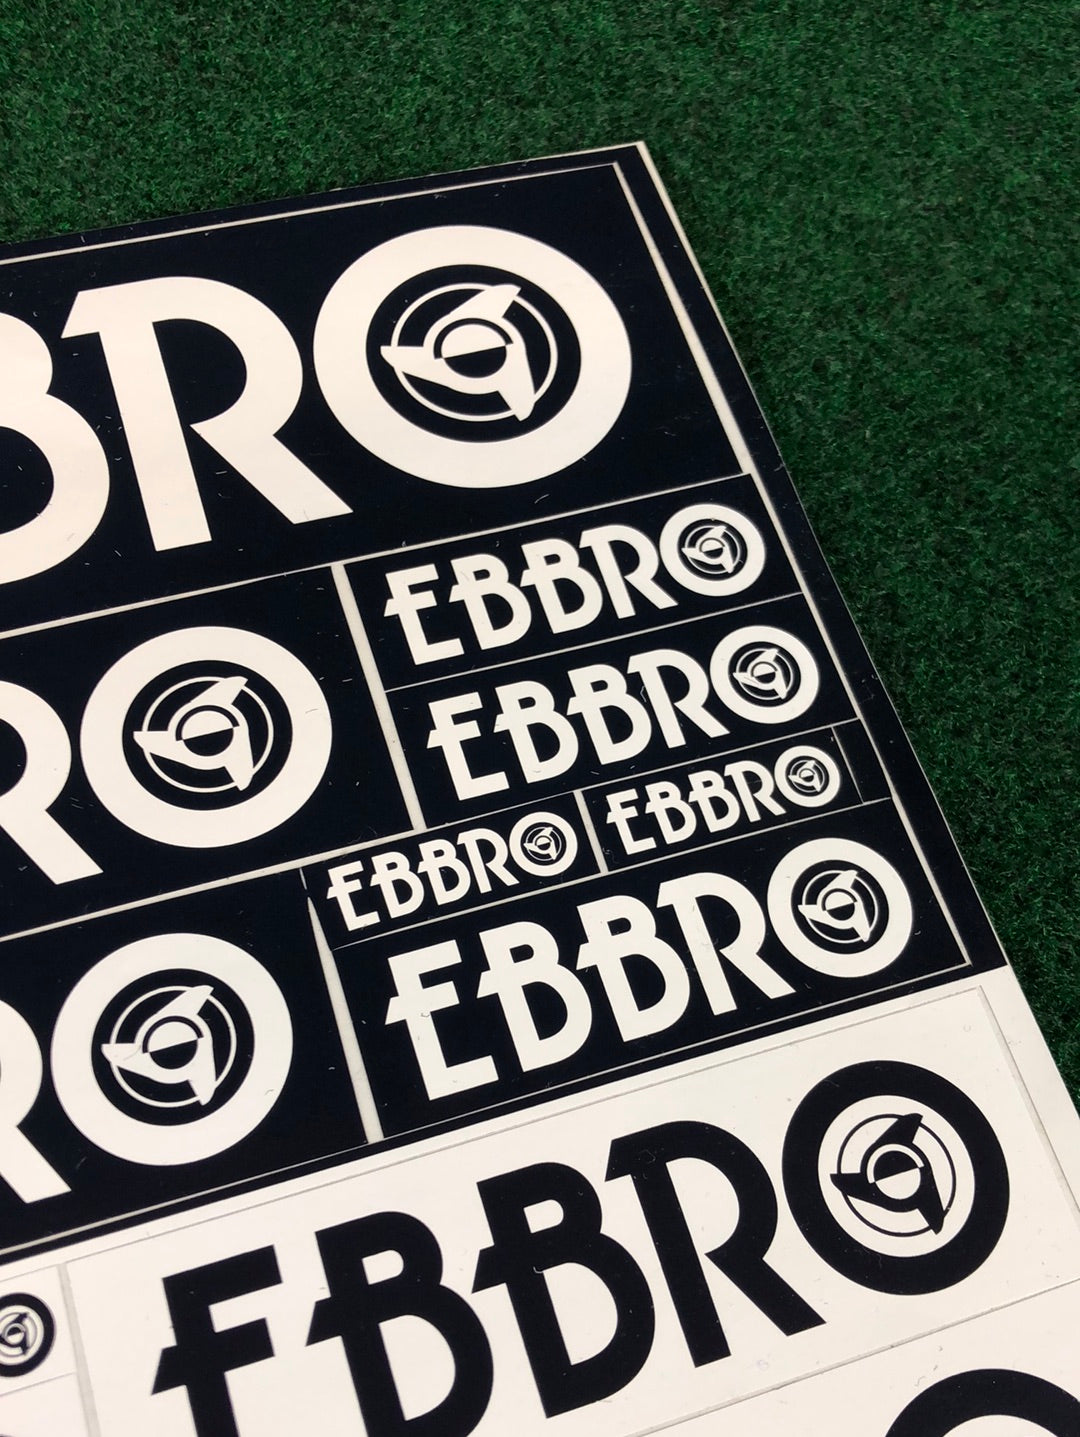 EBBRO - Blue & White Sticker Sheet